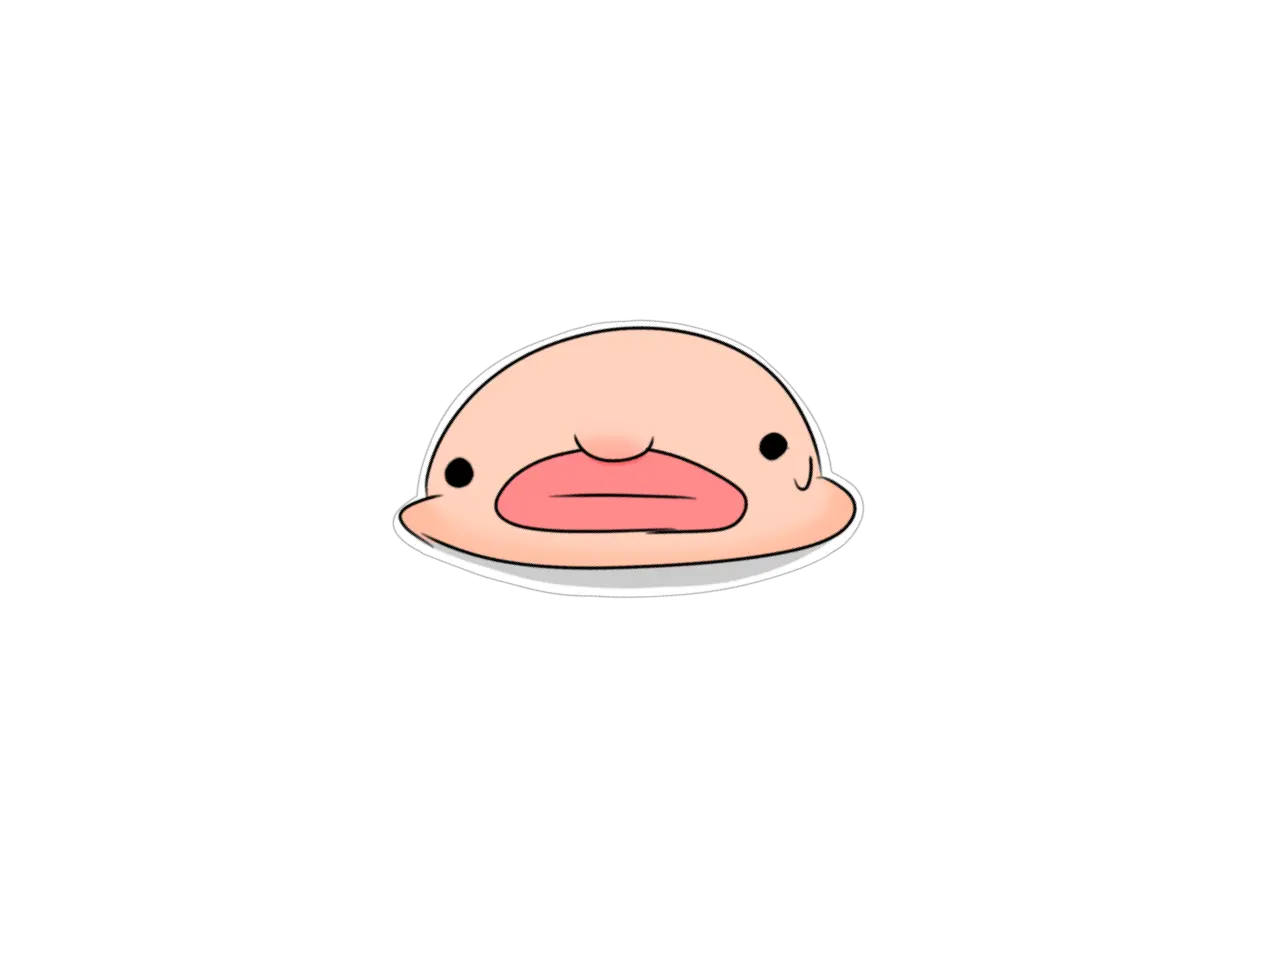 Download Blob Fish Png Image With No Background Pngkeycom Transparent Blob Fish Png Fish Emoji Png